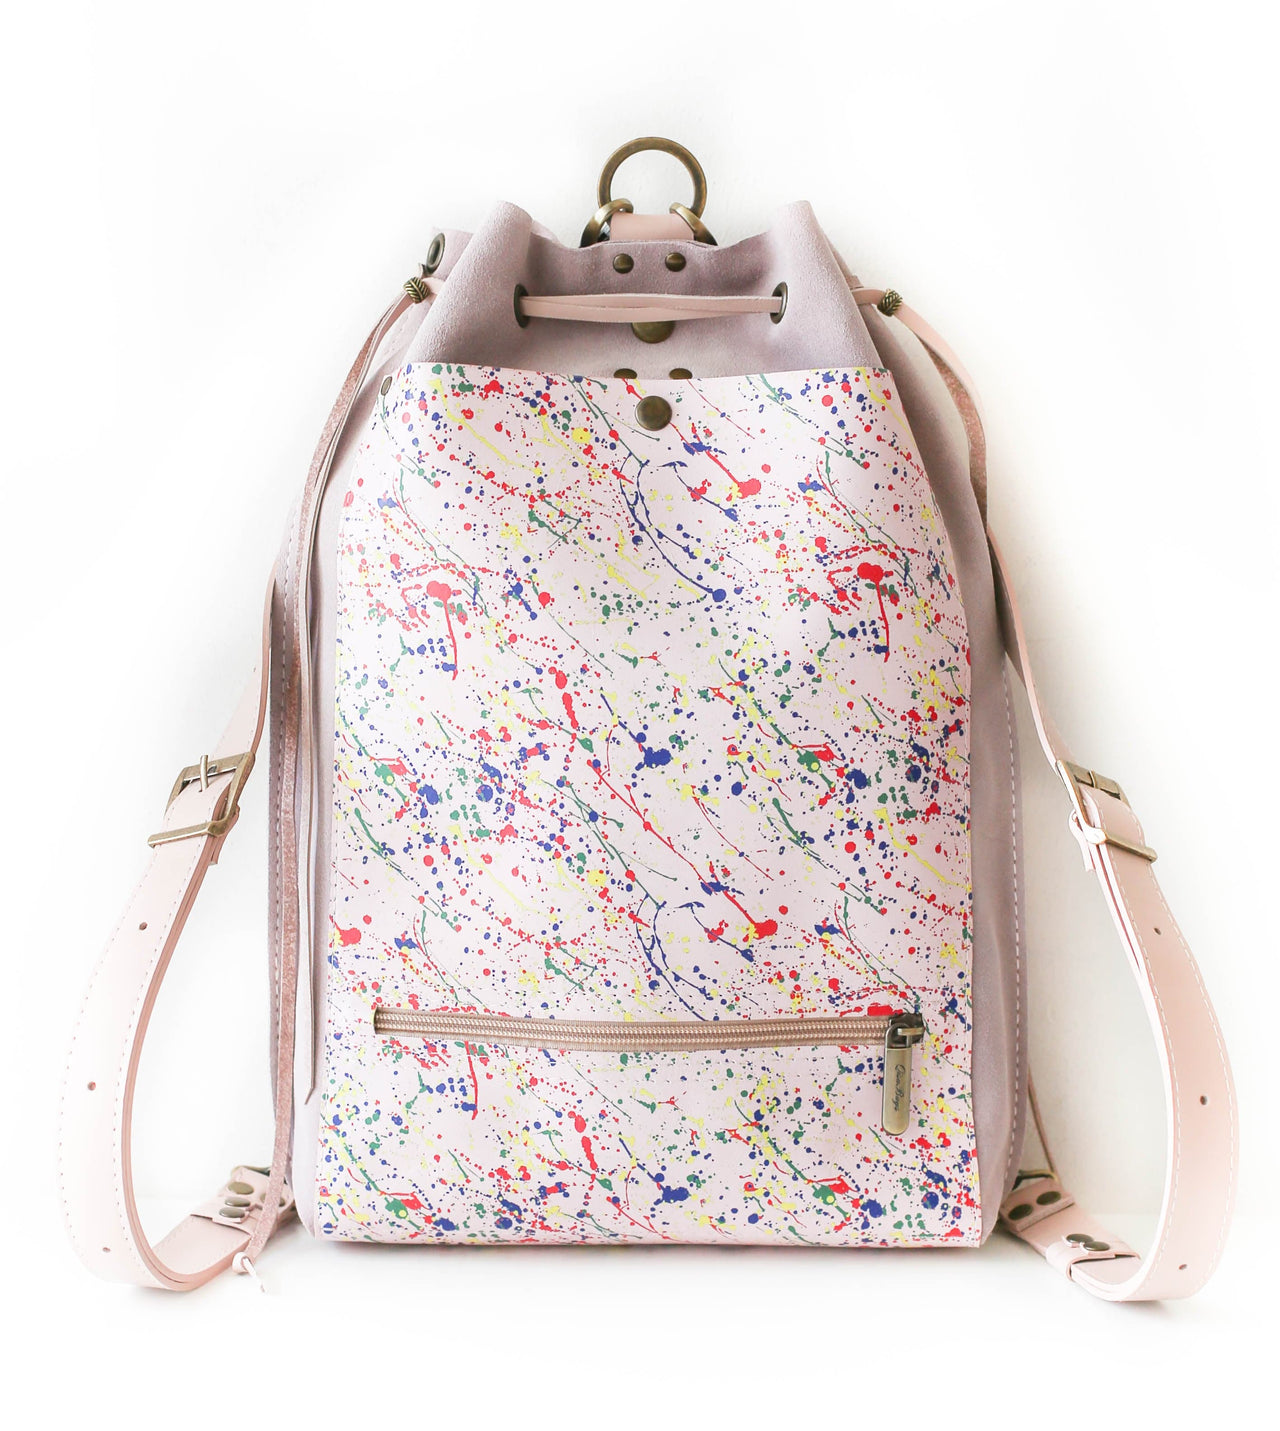 luxury backpack purse